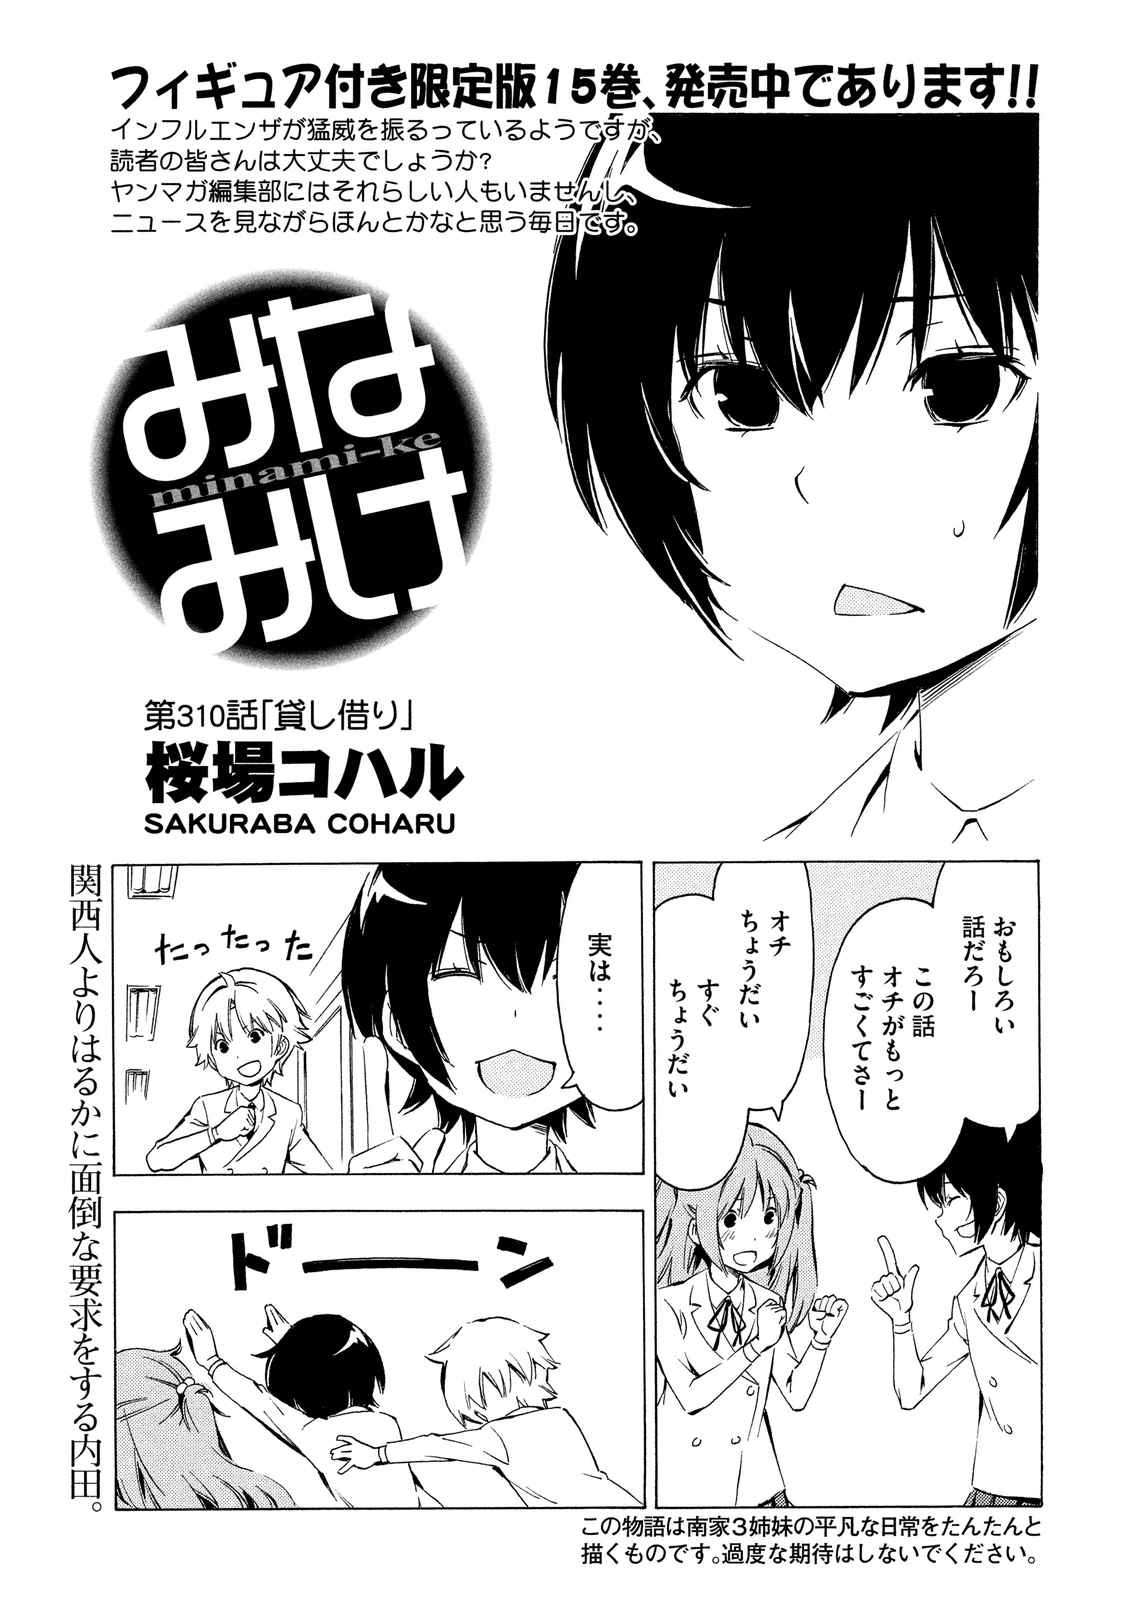 Minami-ke - Chapter 310 - Page 1